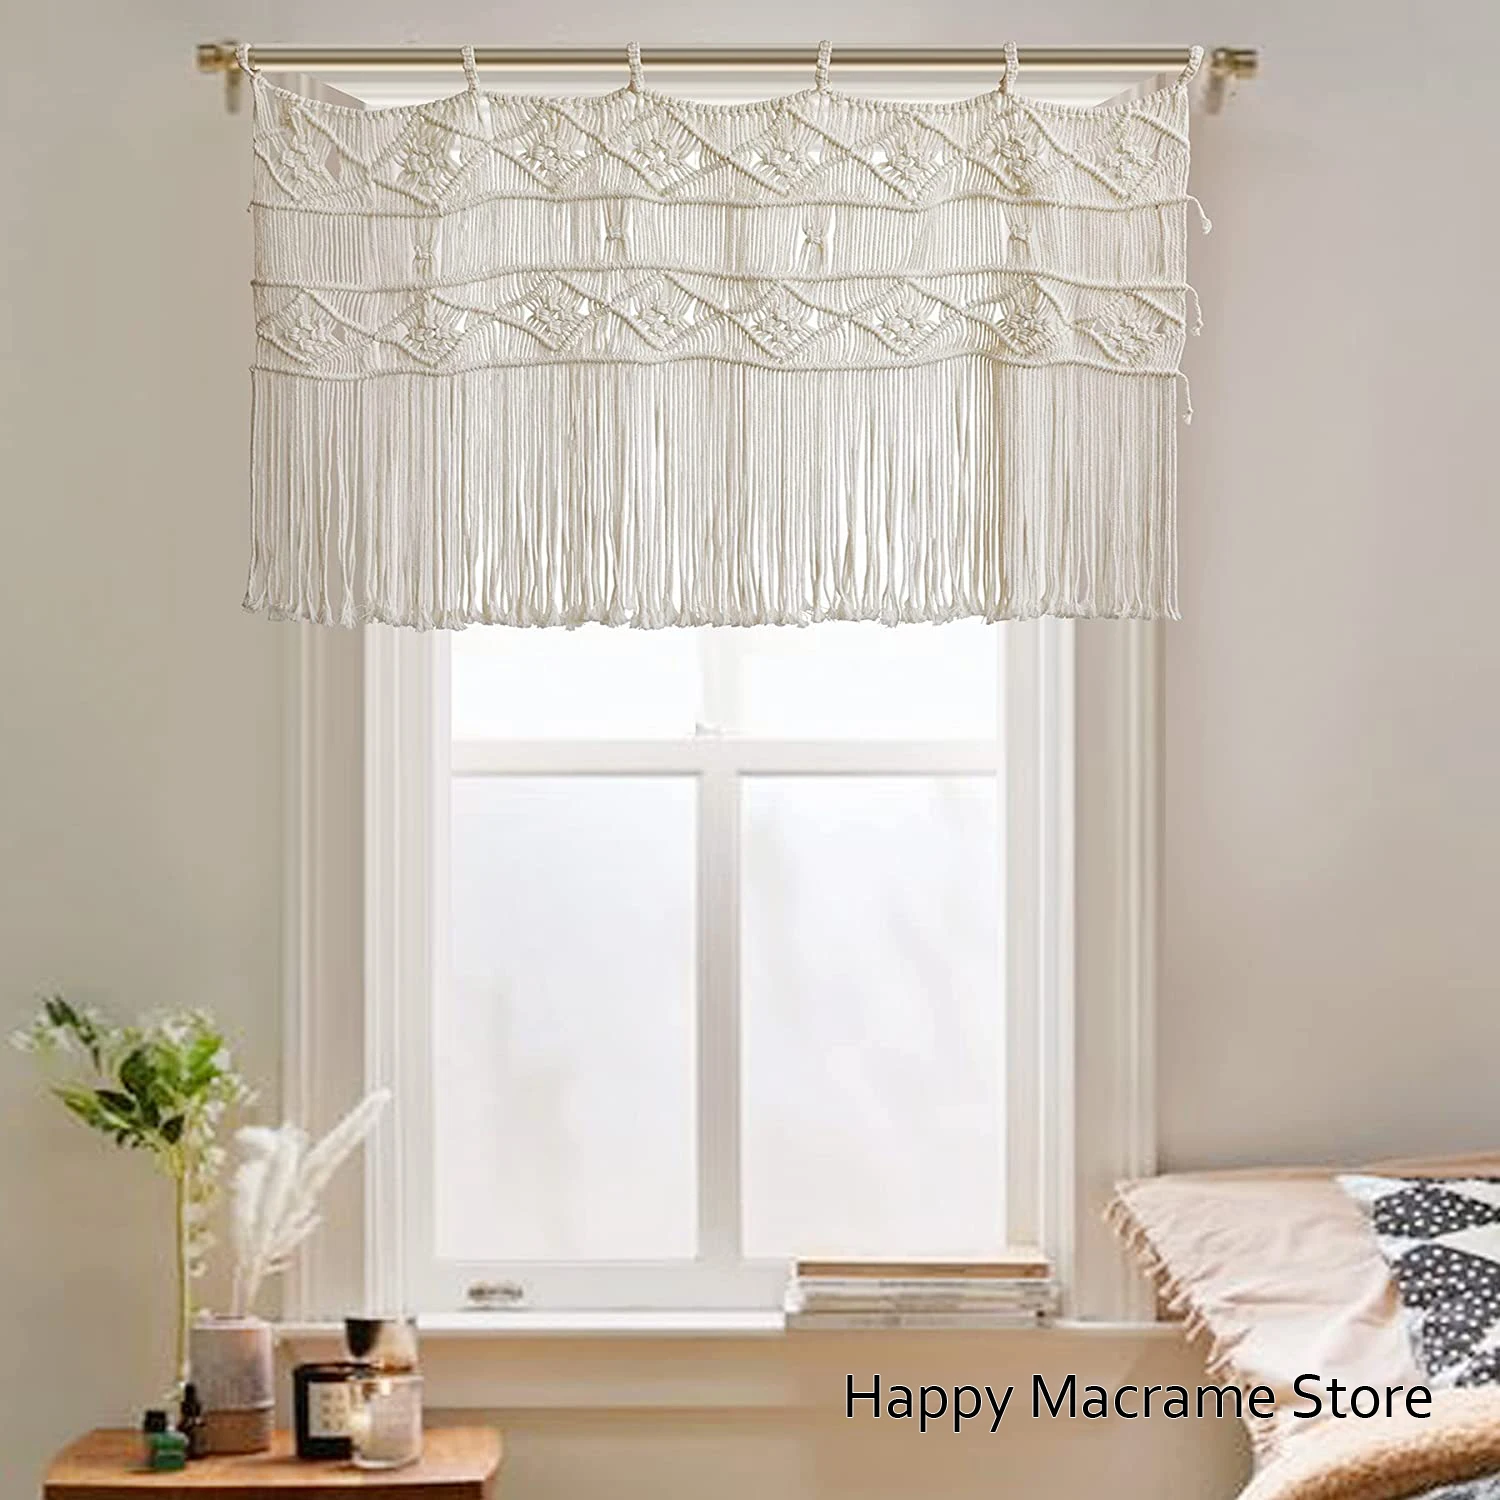 

Macrame Valance Curtain for Window Doorway Macrame Wall Hanging Macrame Curtain Handmade Boho Wall Decor 43Wx 30L-Without rod